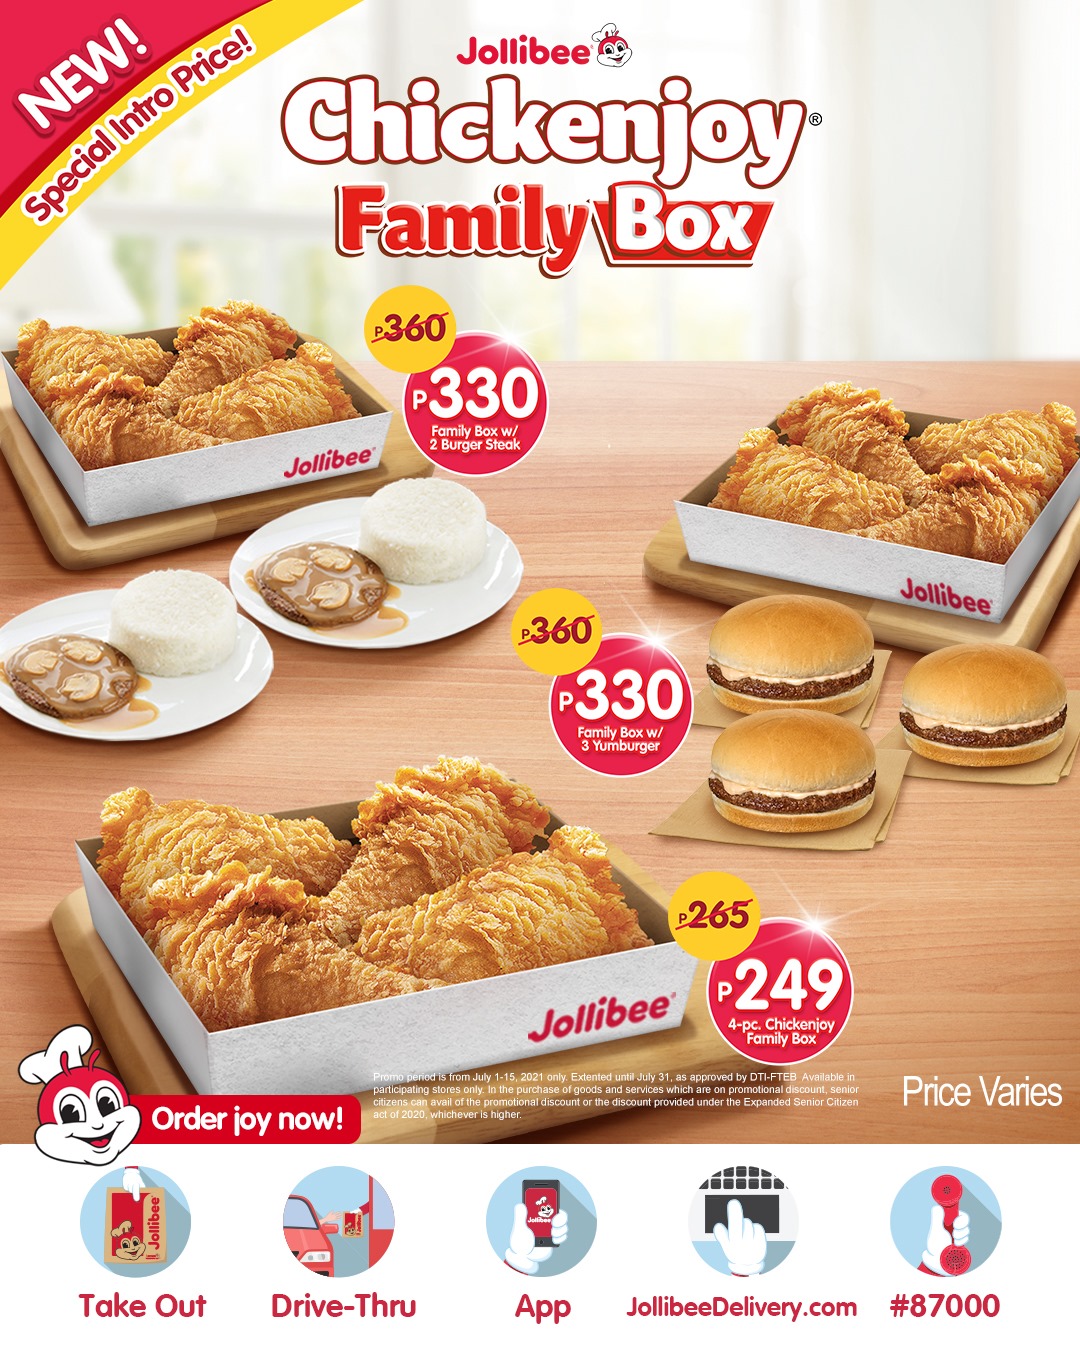 New Jollibee Chickenjoy Family Box